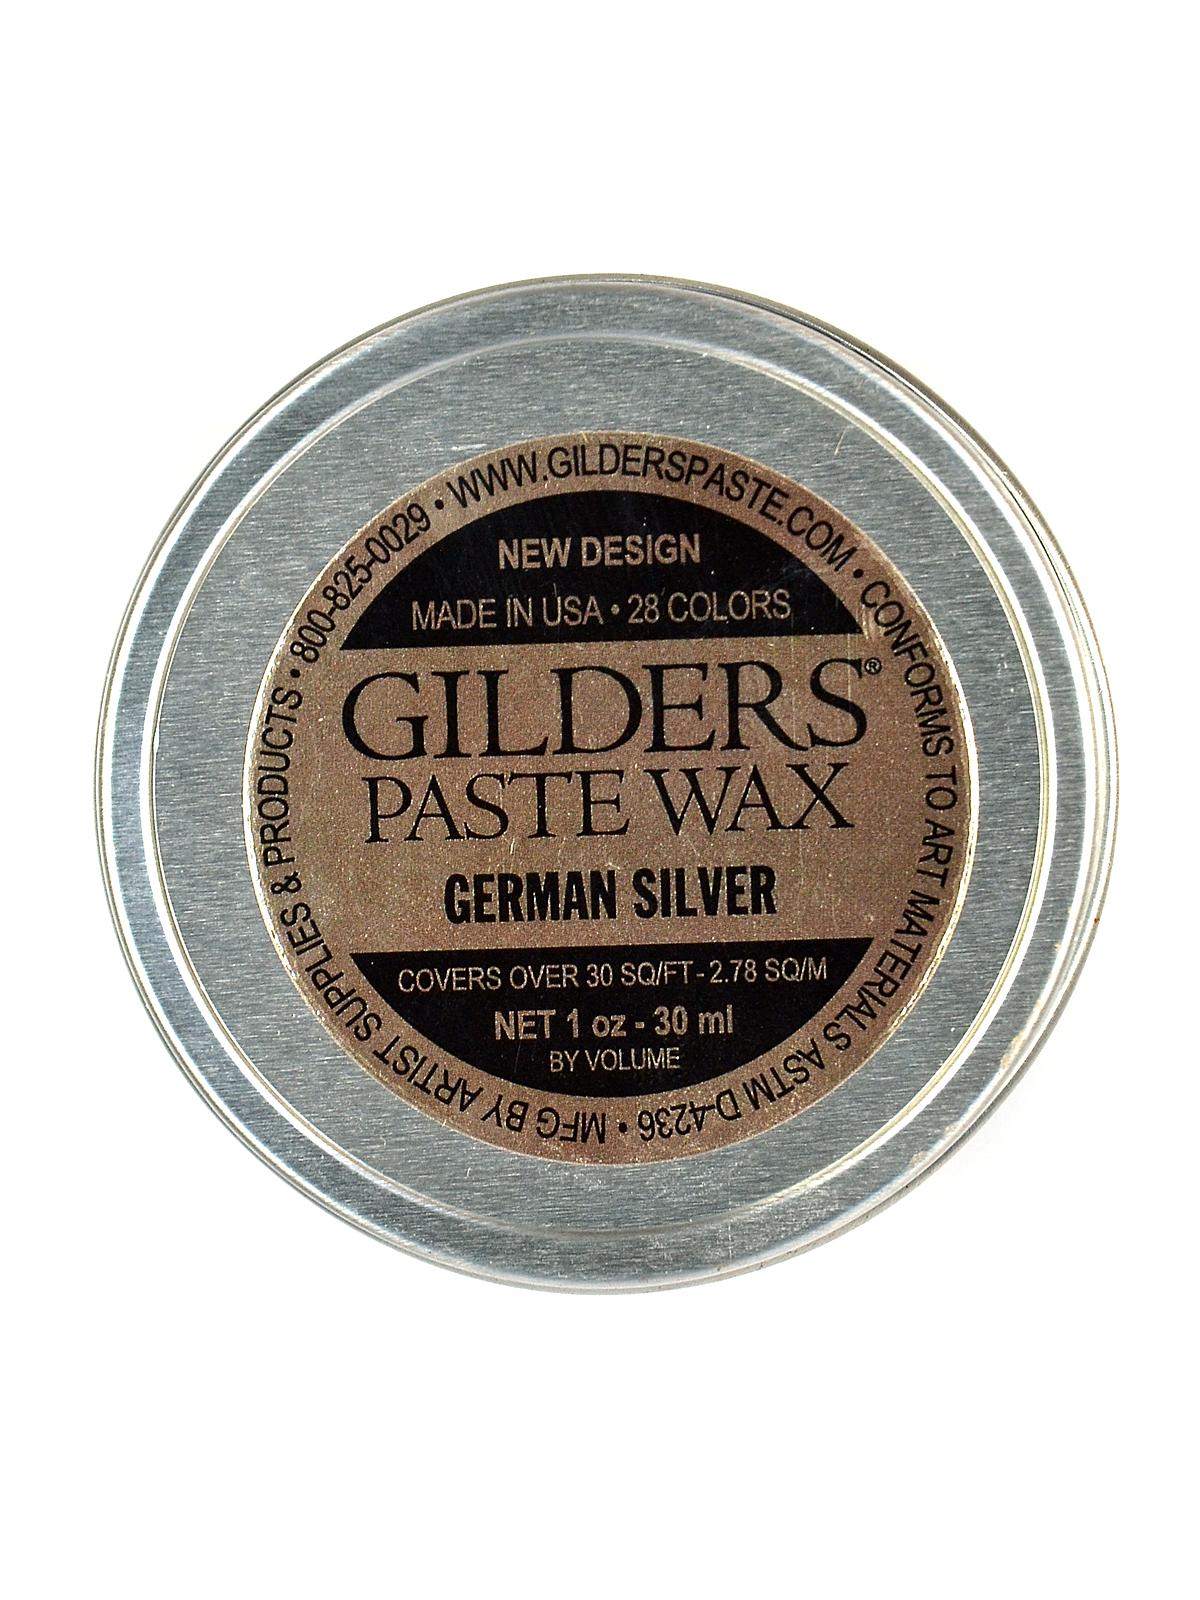 Gilder's Paste Wax German Silver 1 Oz. Tin